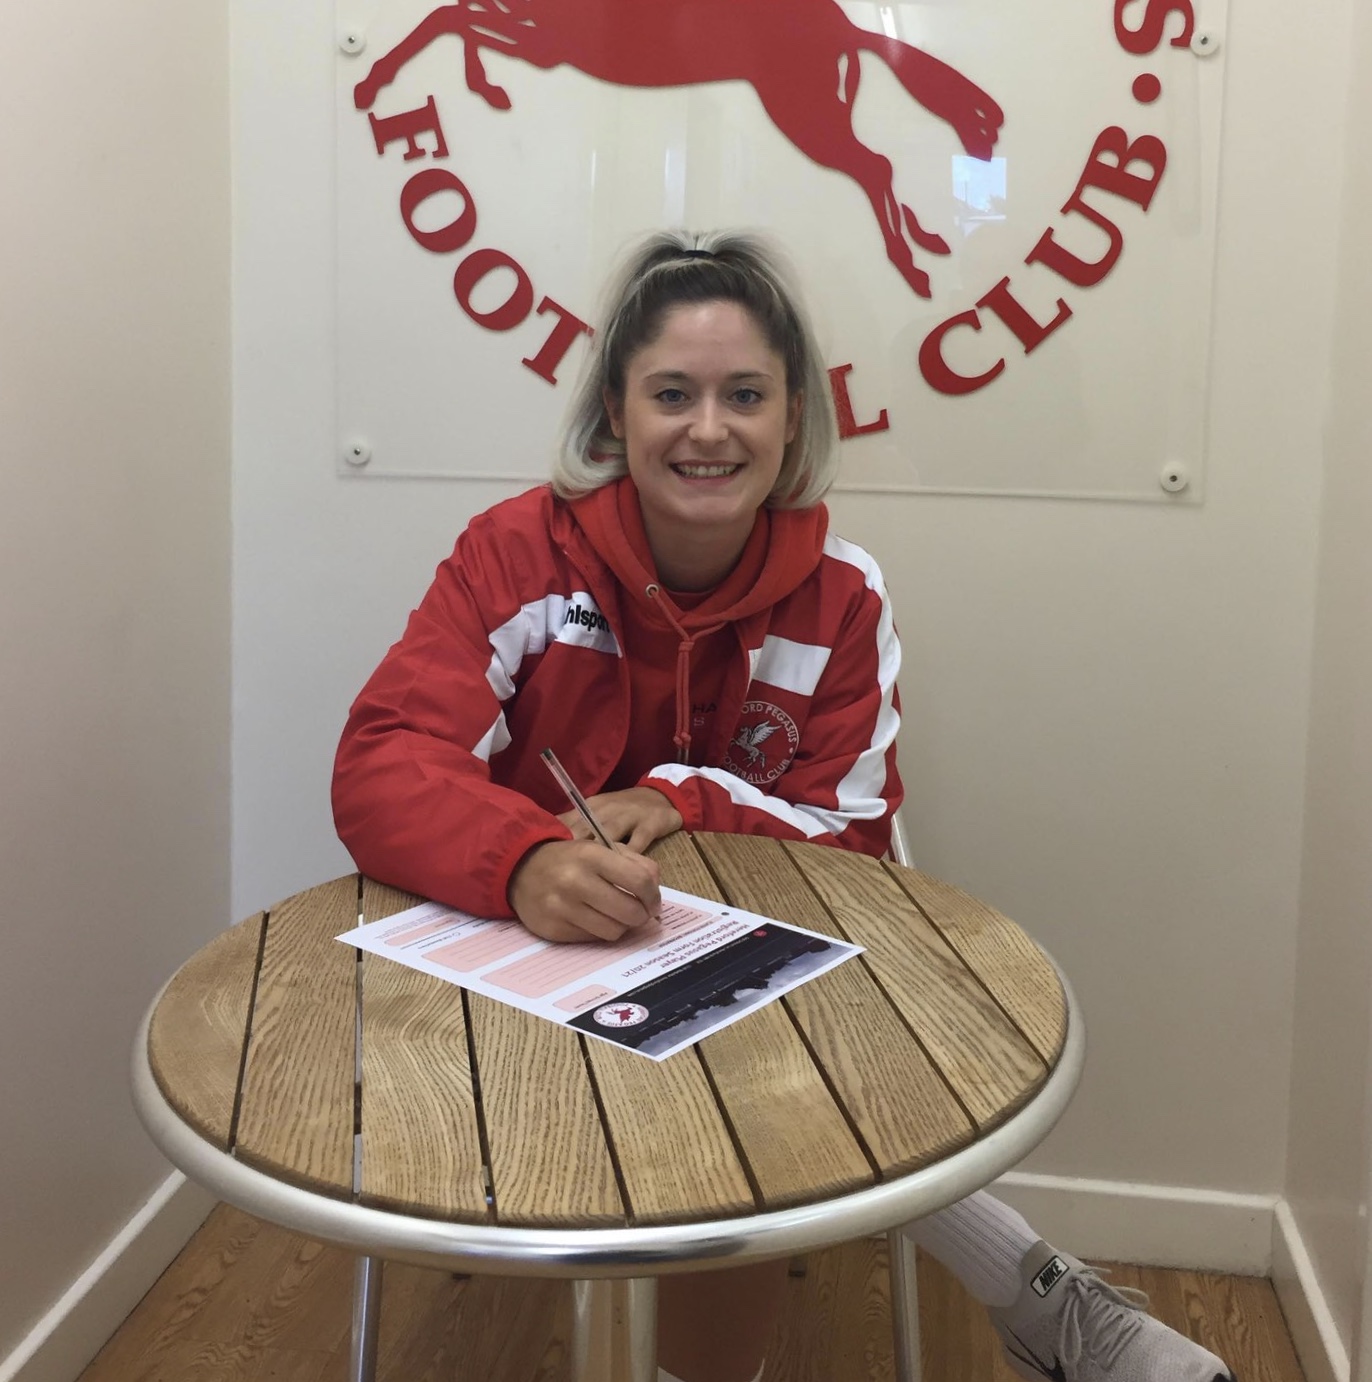 FOOTBALL | Hereford Pegasus Ladies FC name several signings